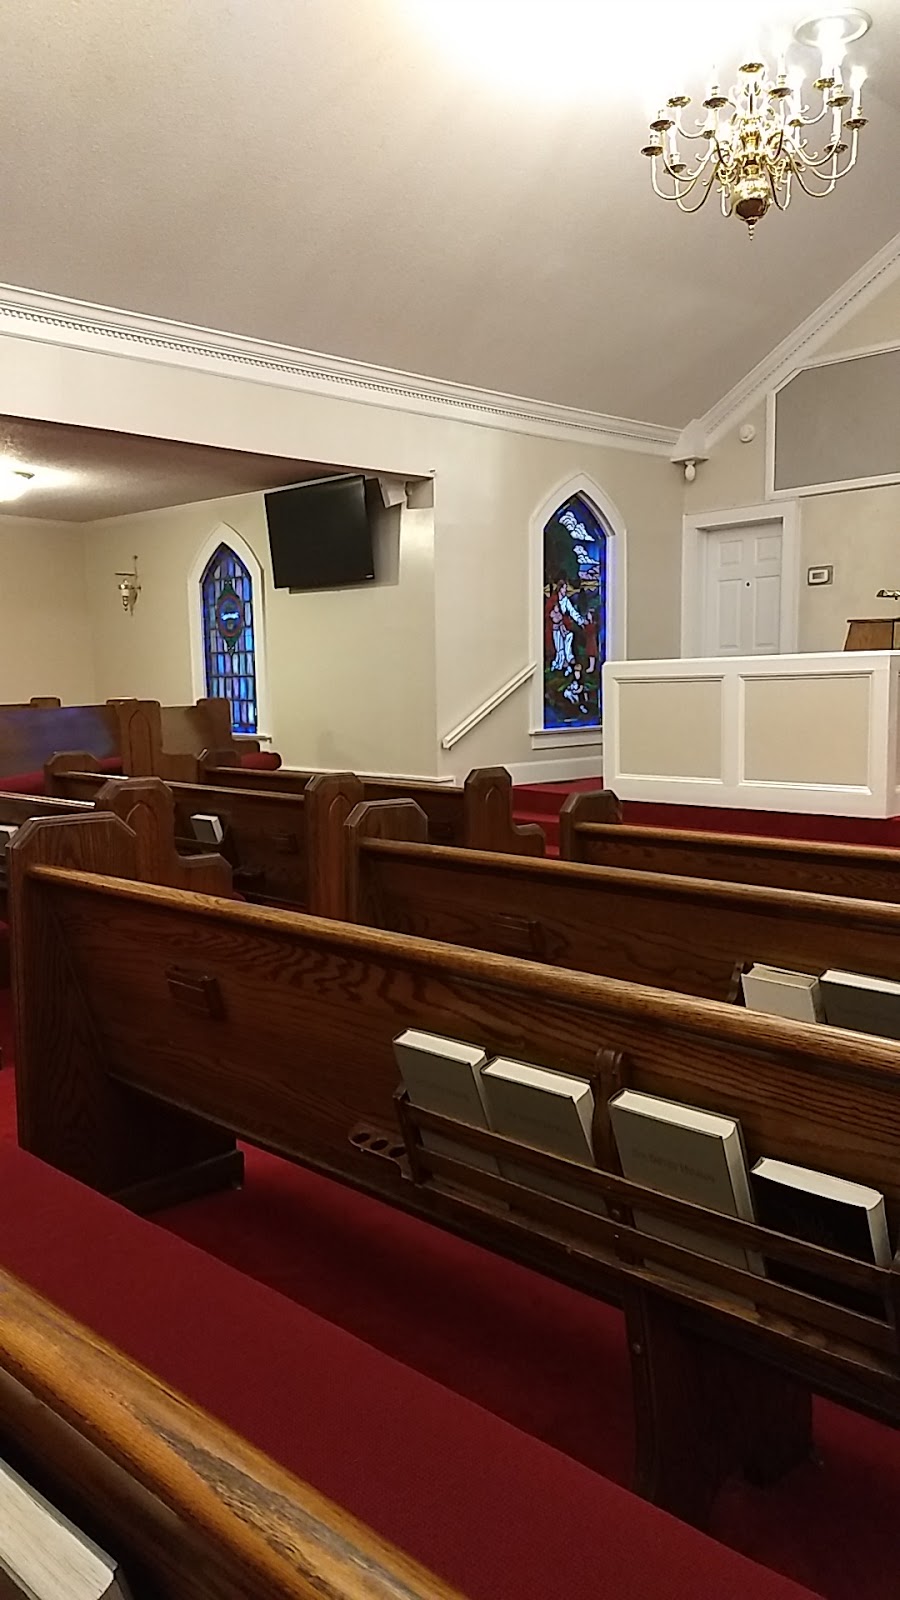 Flat Rock Baptist Church - church  | Photo 1 of 3 | Address: 1529 Flat Rock Church Rd, Louisburg, NC 27549, USA | Phone: (919) 556-1622